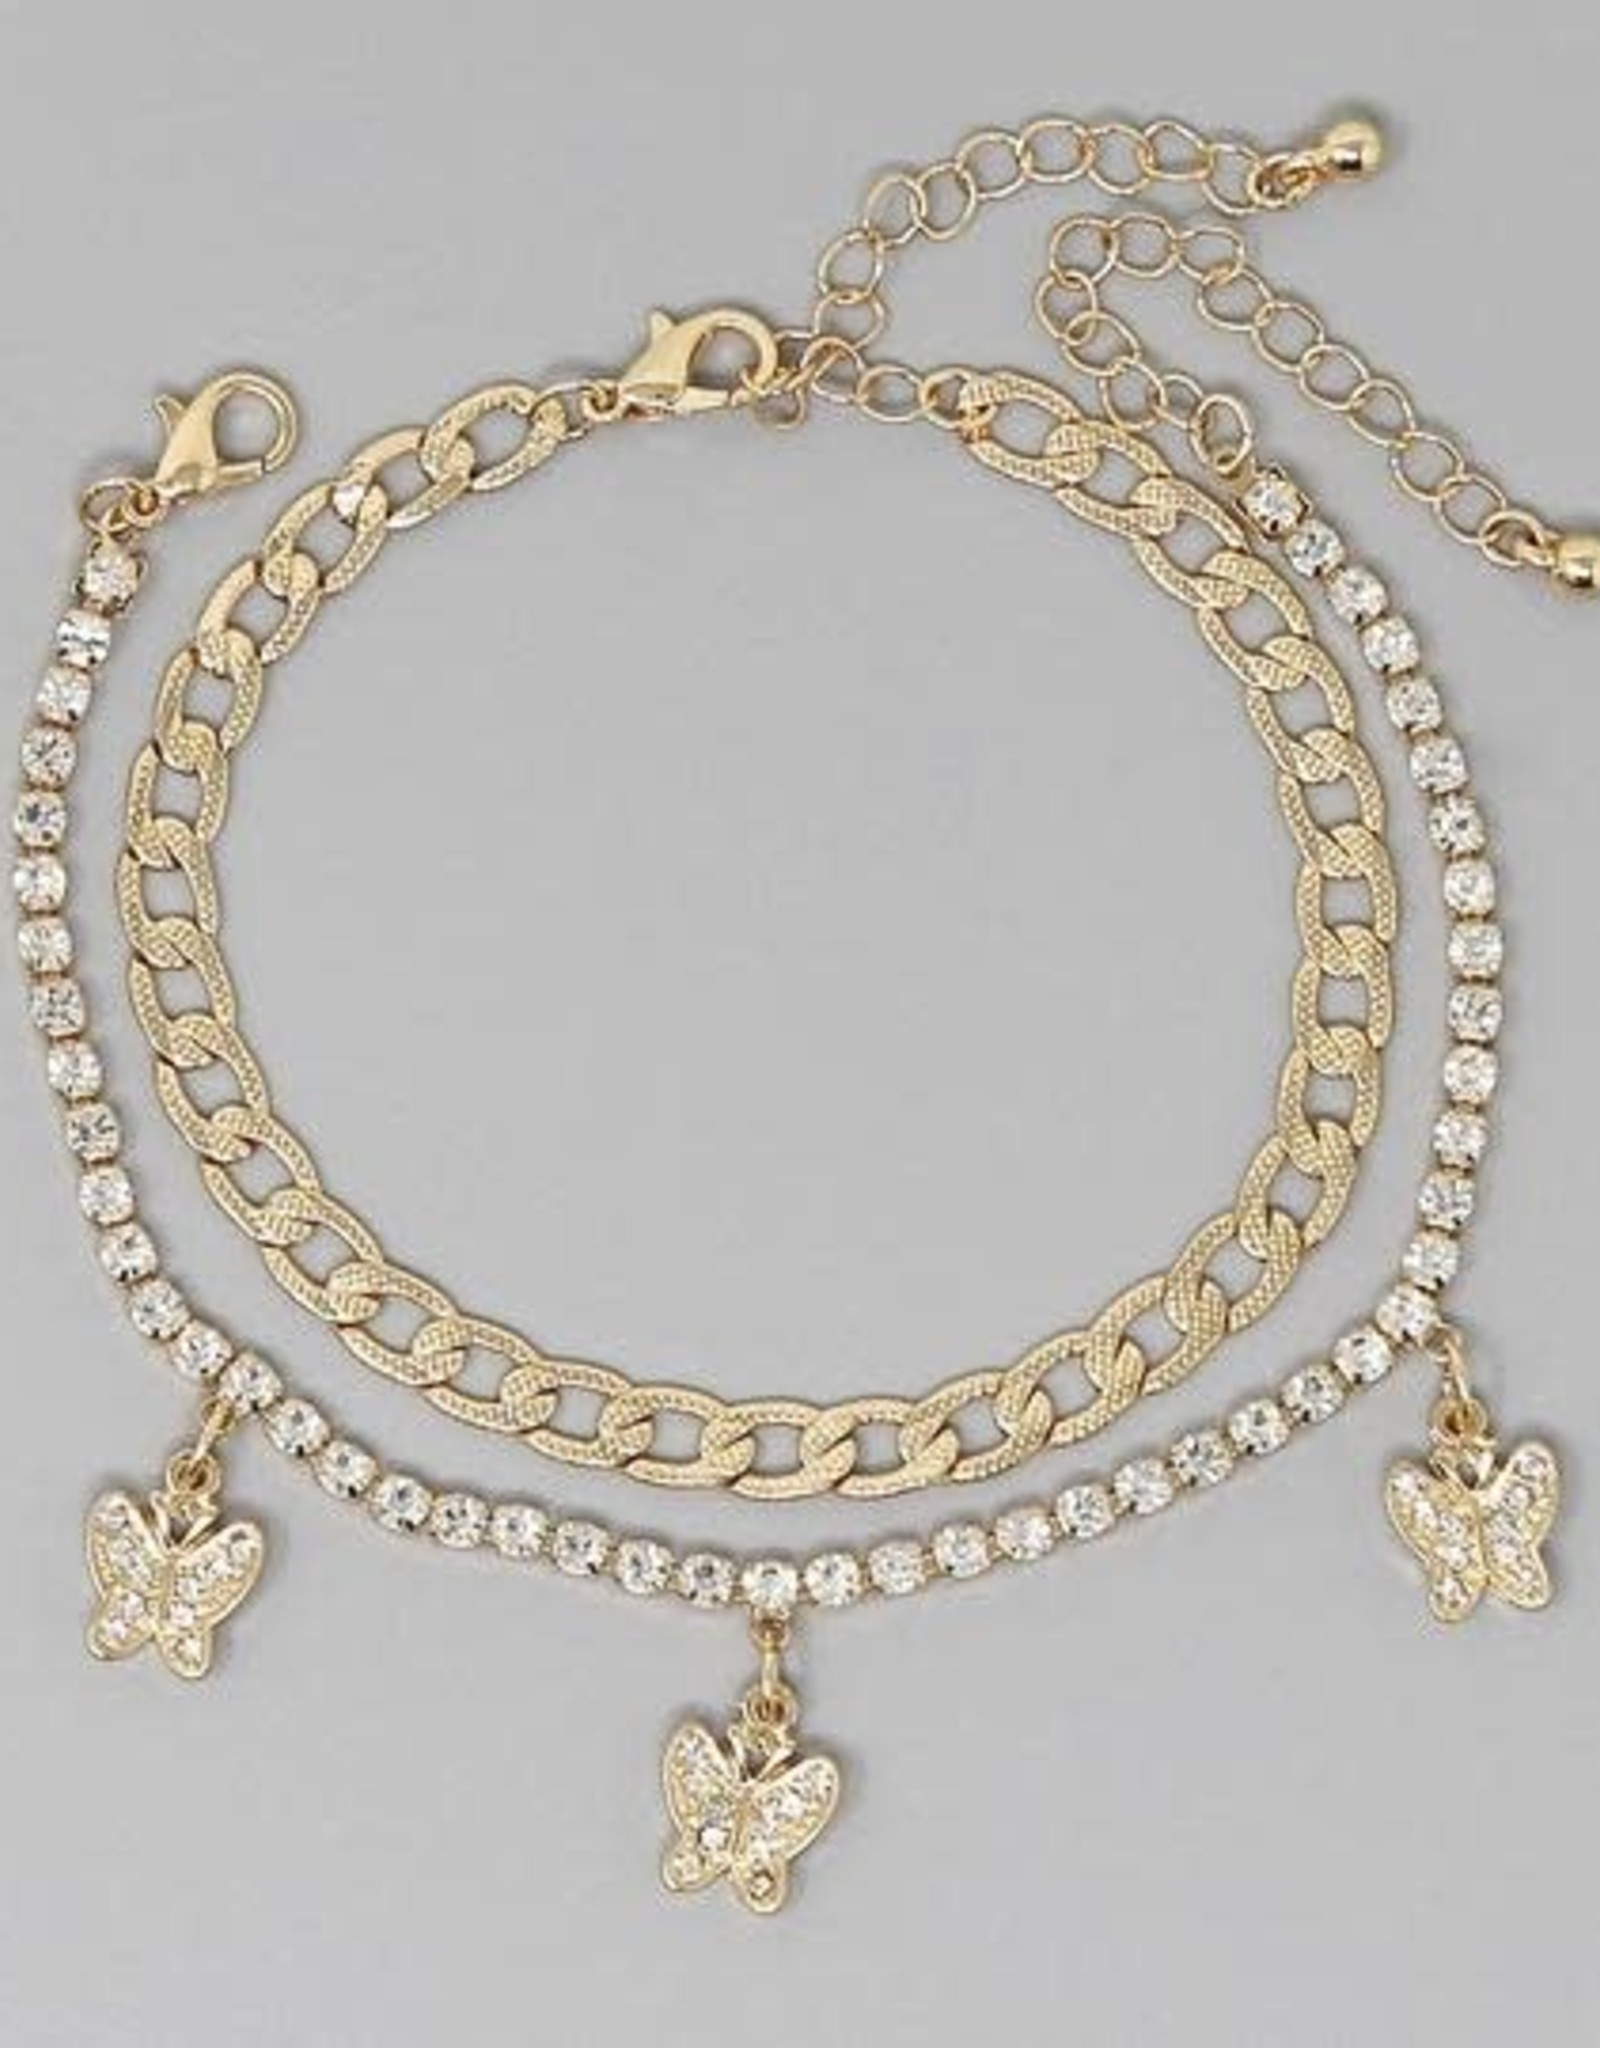 Rhinestone Pave Butterfly Charm / Curb Chain Bracelet Set